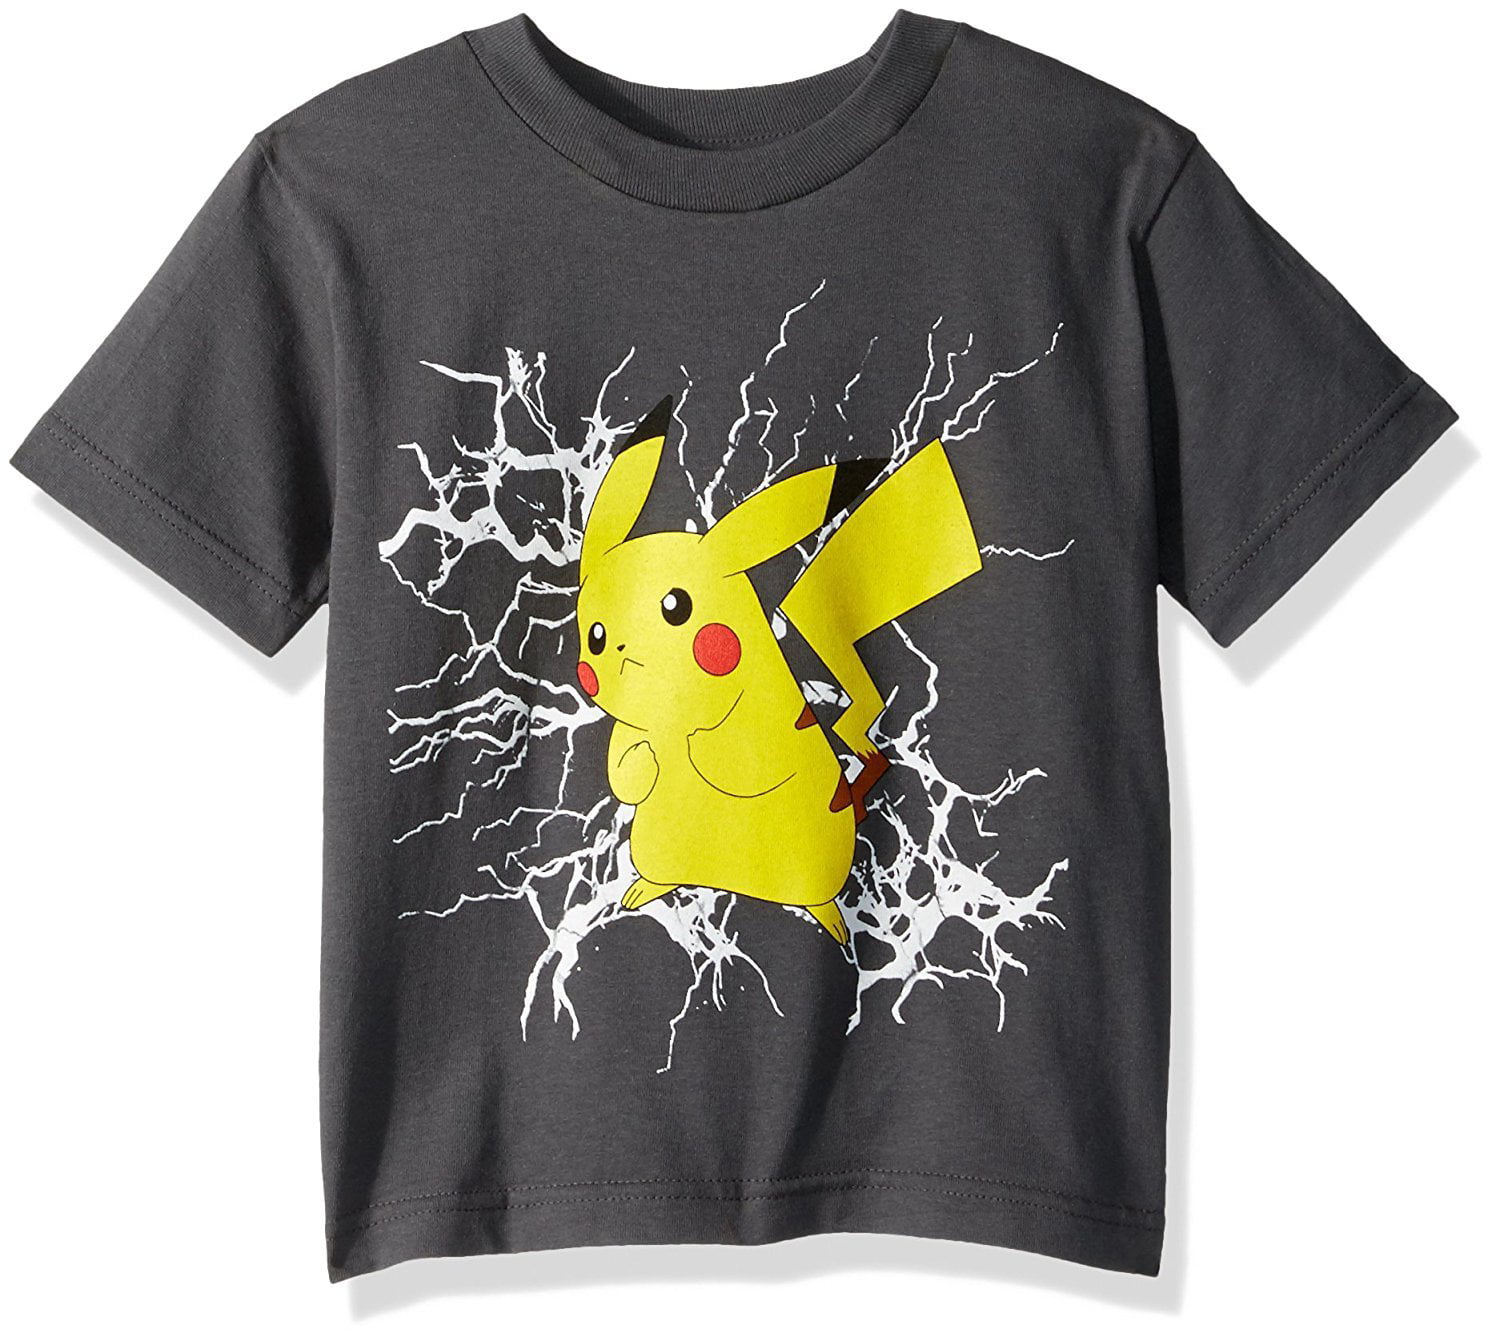 Buy > pokemon shirt for kids > in stock